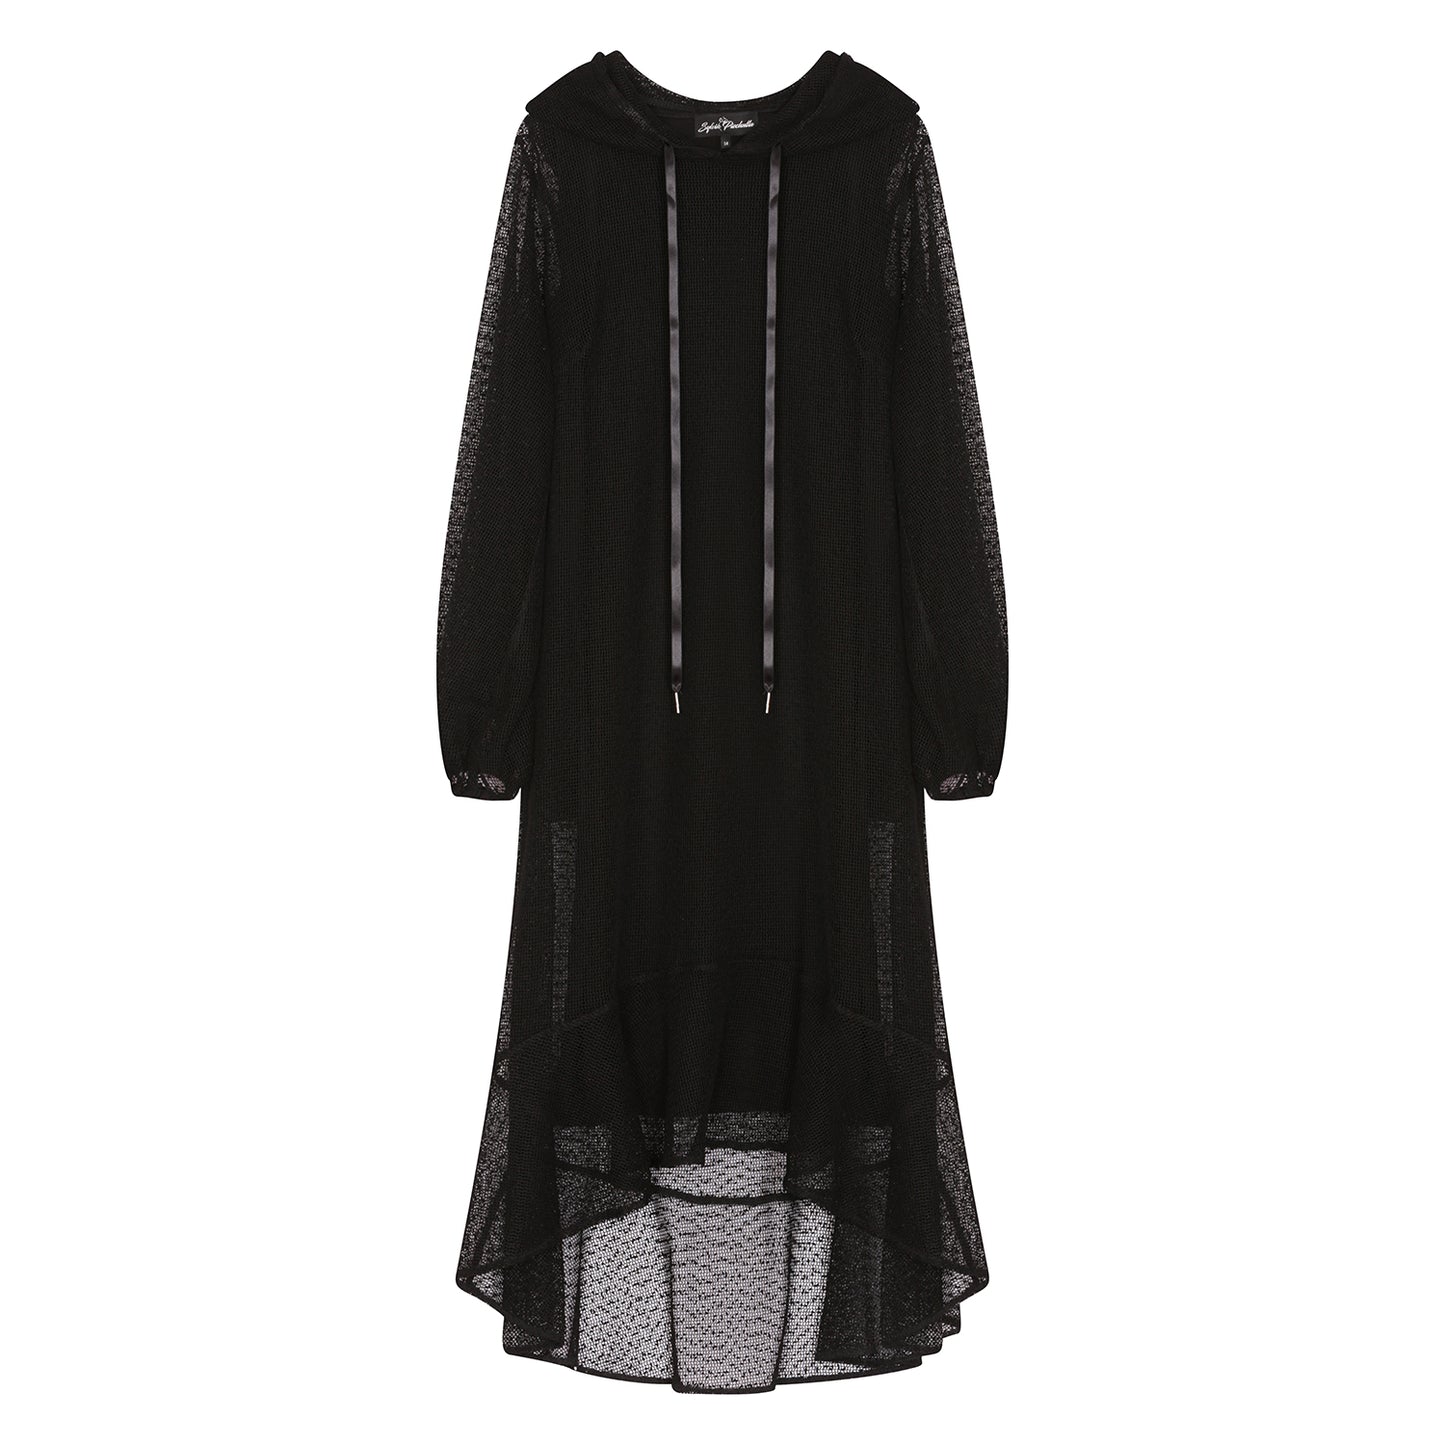 Aphrodite Black Holiday Dress + Black Undergarment